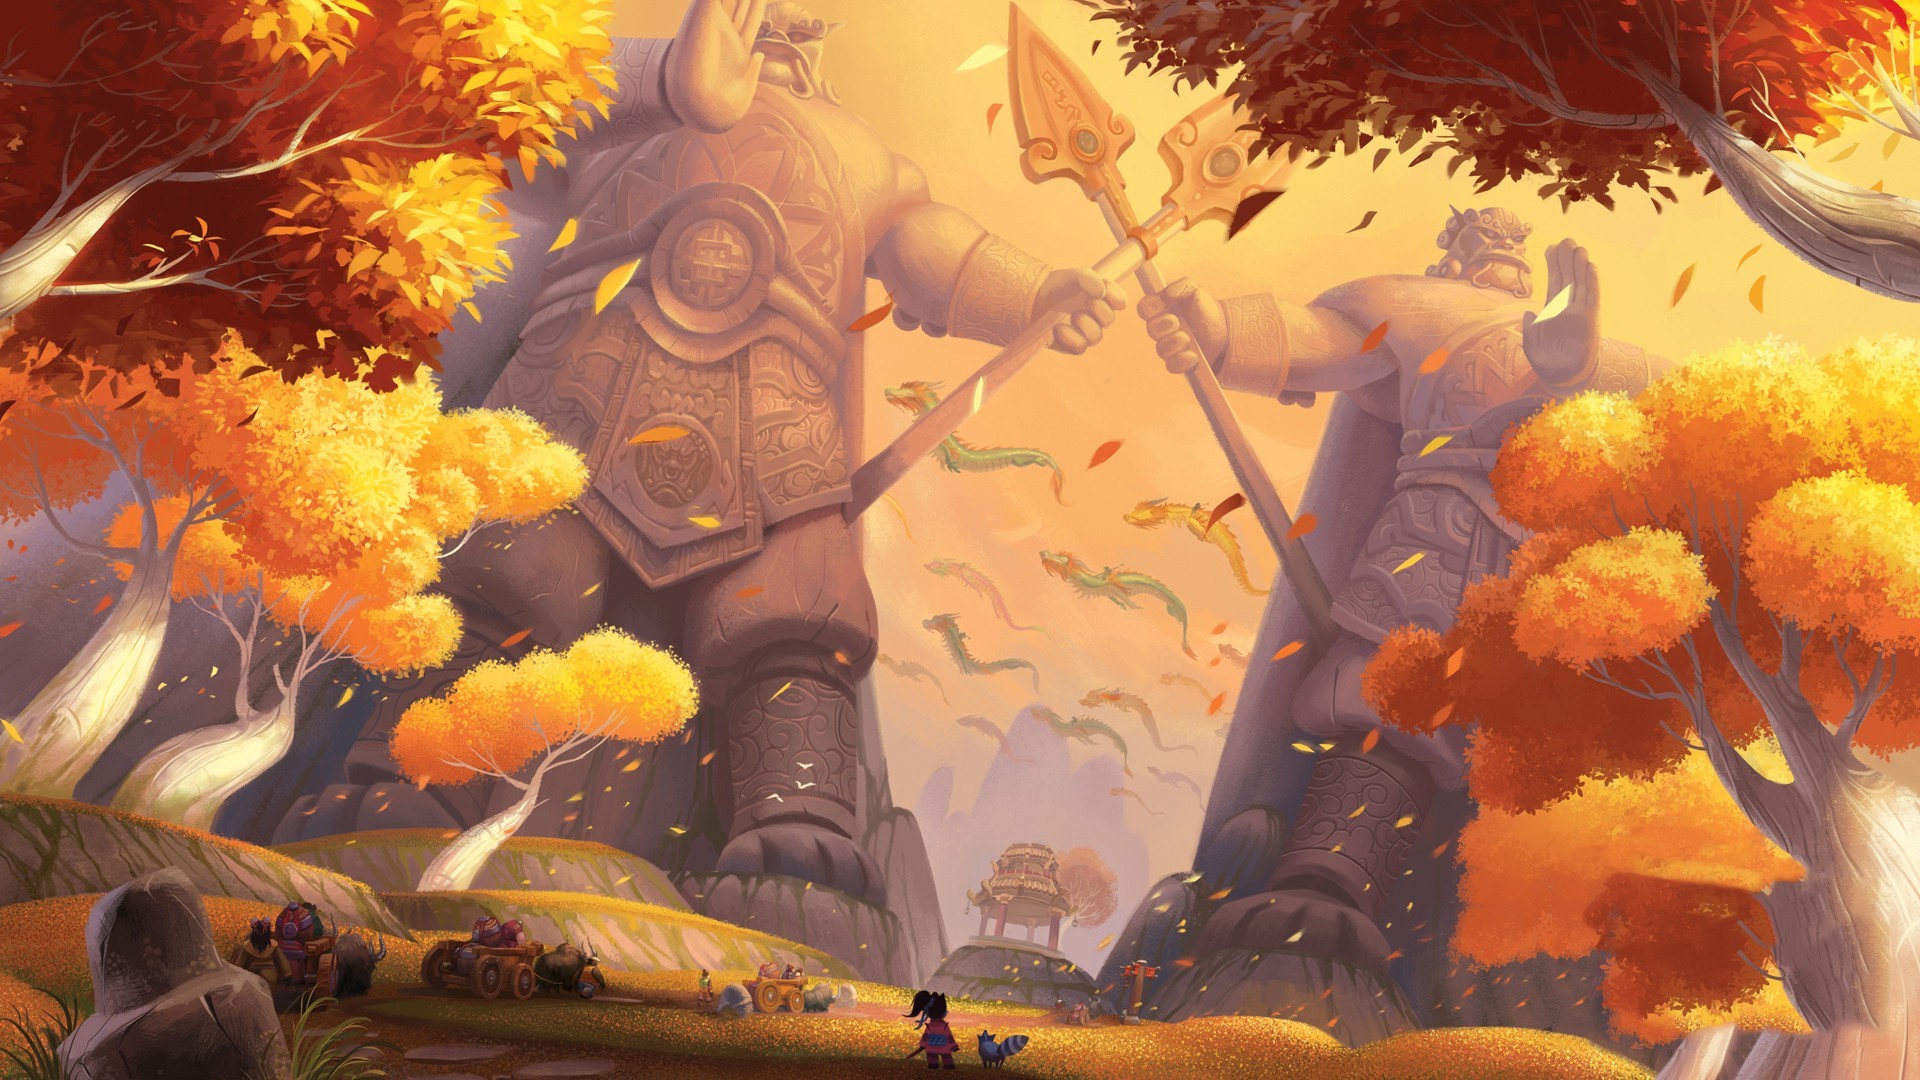 General 1920x1080 World of Warcraft World of Warcraft: Mists of Pandaria video games PC gaming video game art fantasy art